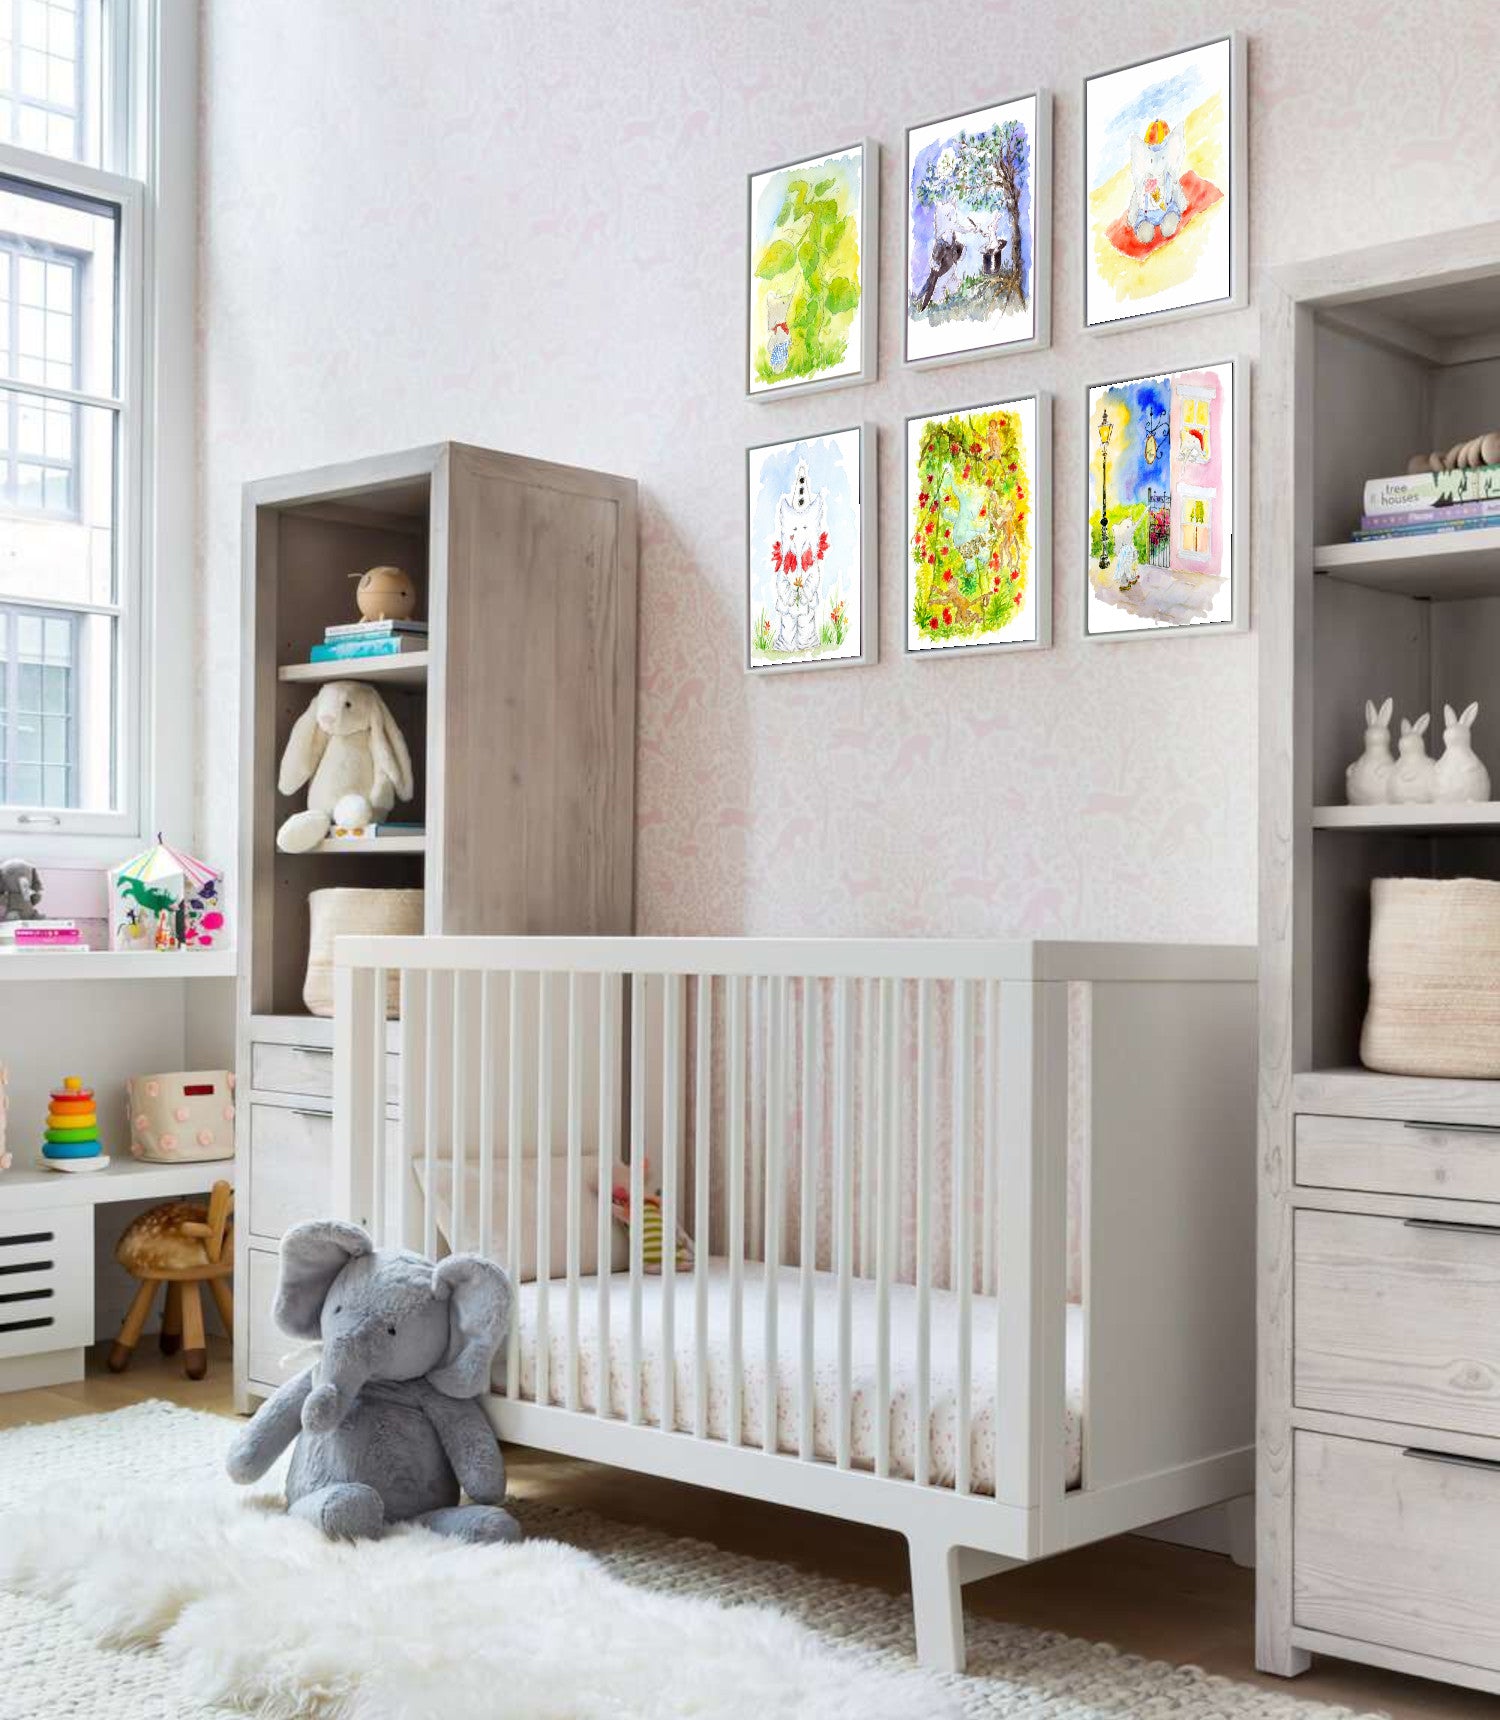 Andi Lucas Elephant prints in a stylish nursery